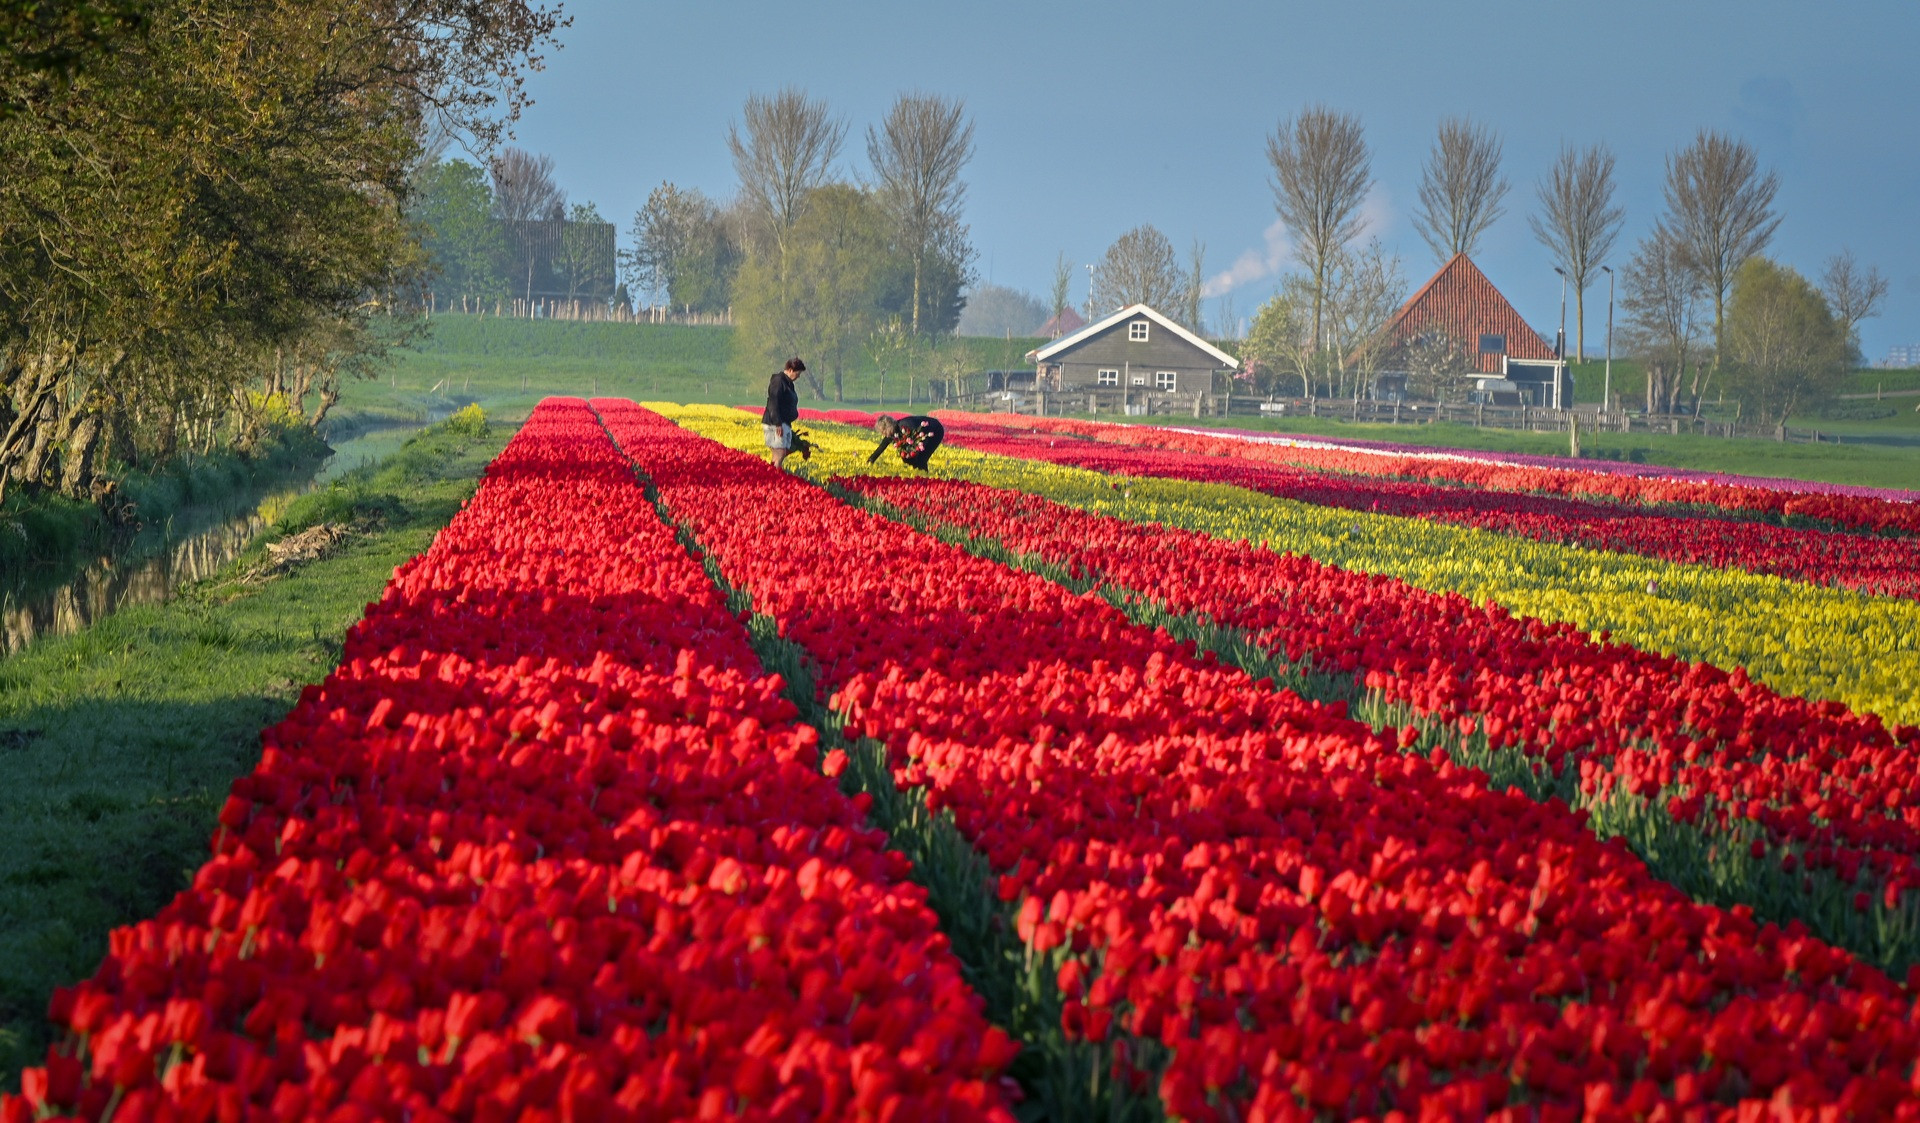 1000 Hình Nền Hoa TuLip - Hoa Tulip Đẹp Nhất | Hình nền hoa, Hoa tulip, Hoa